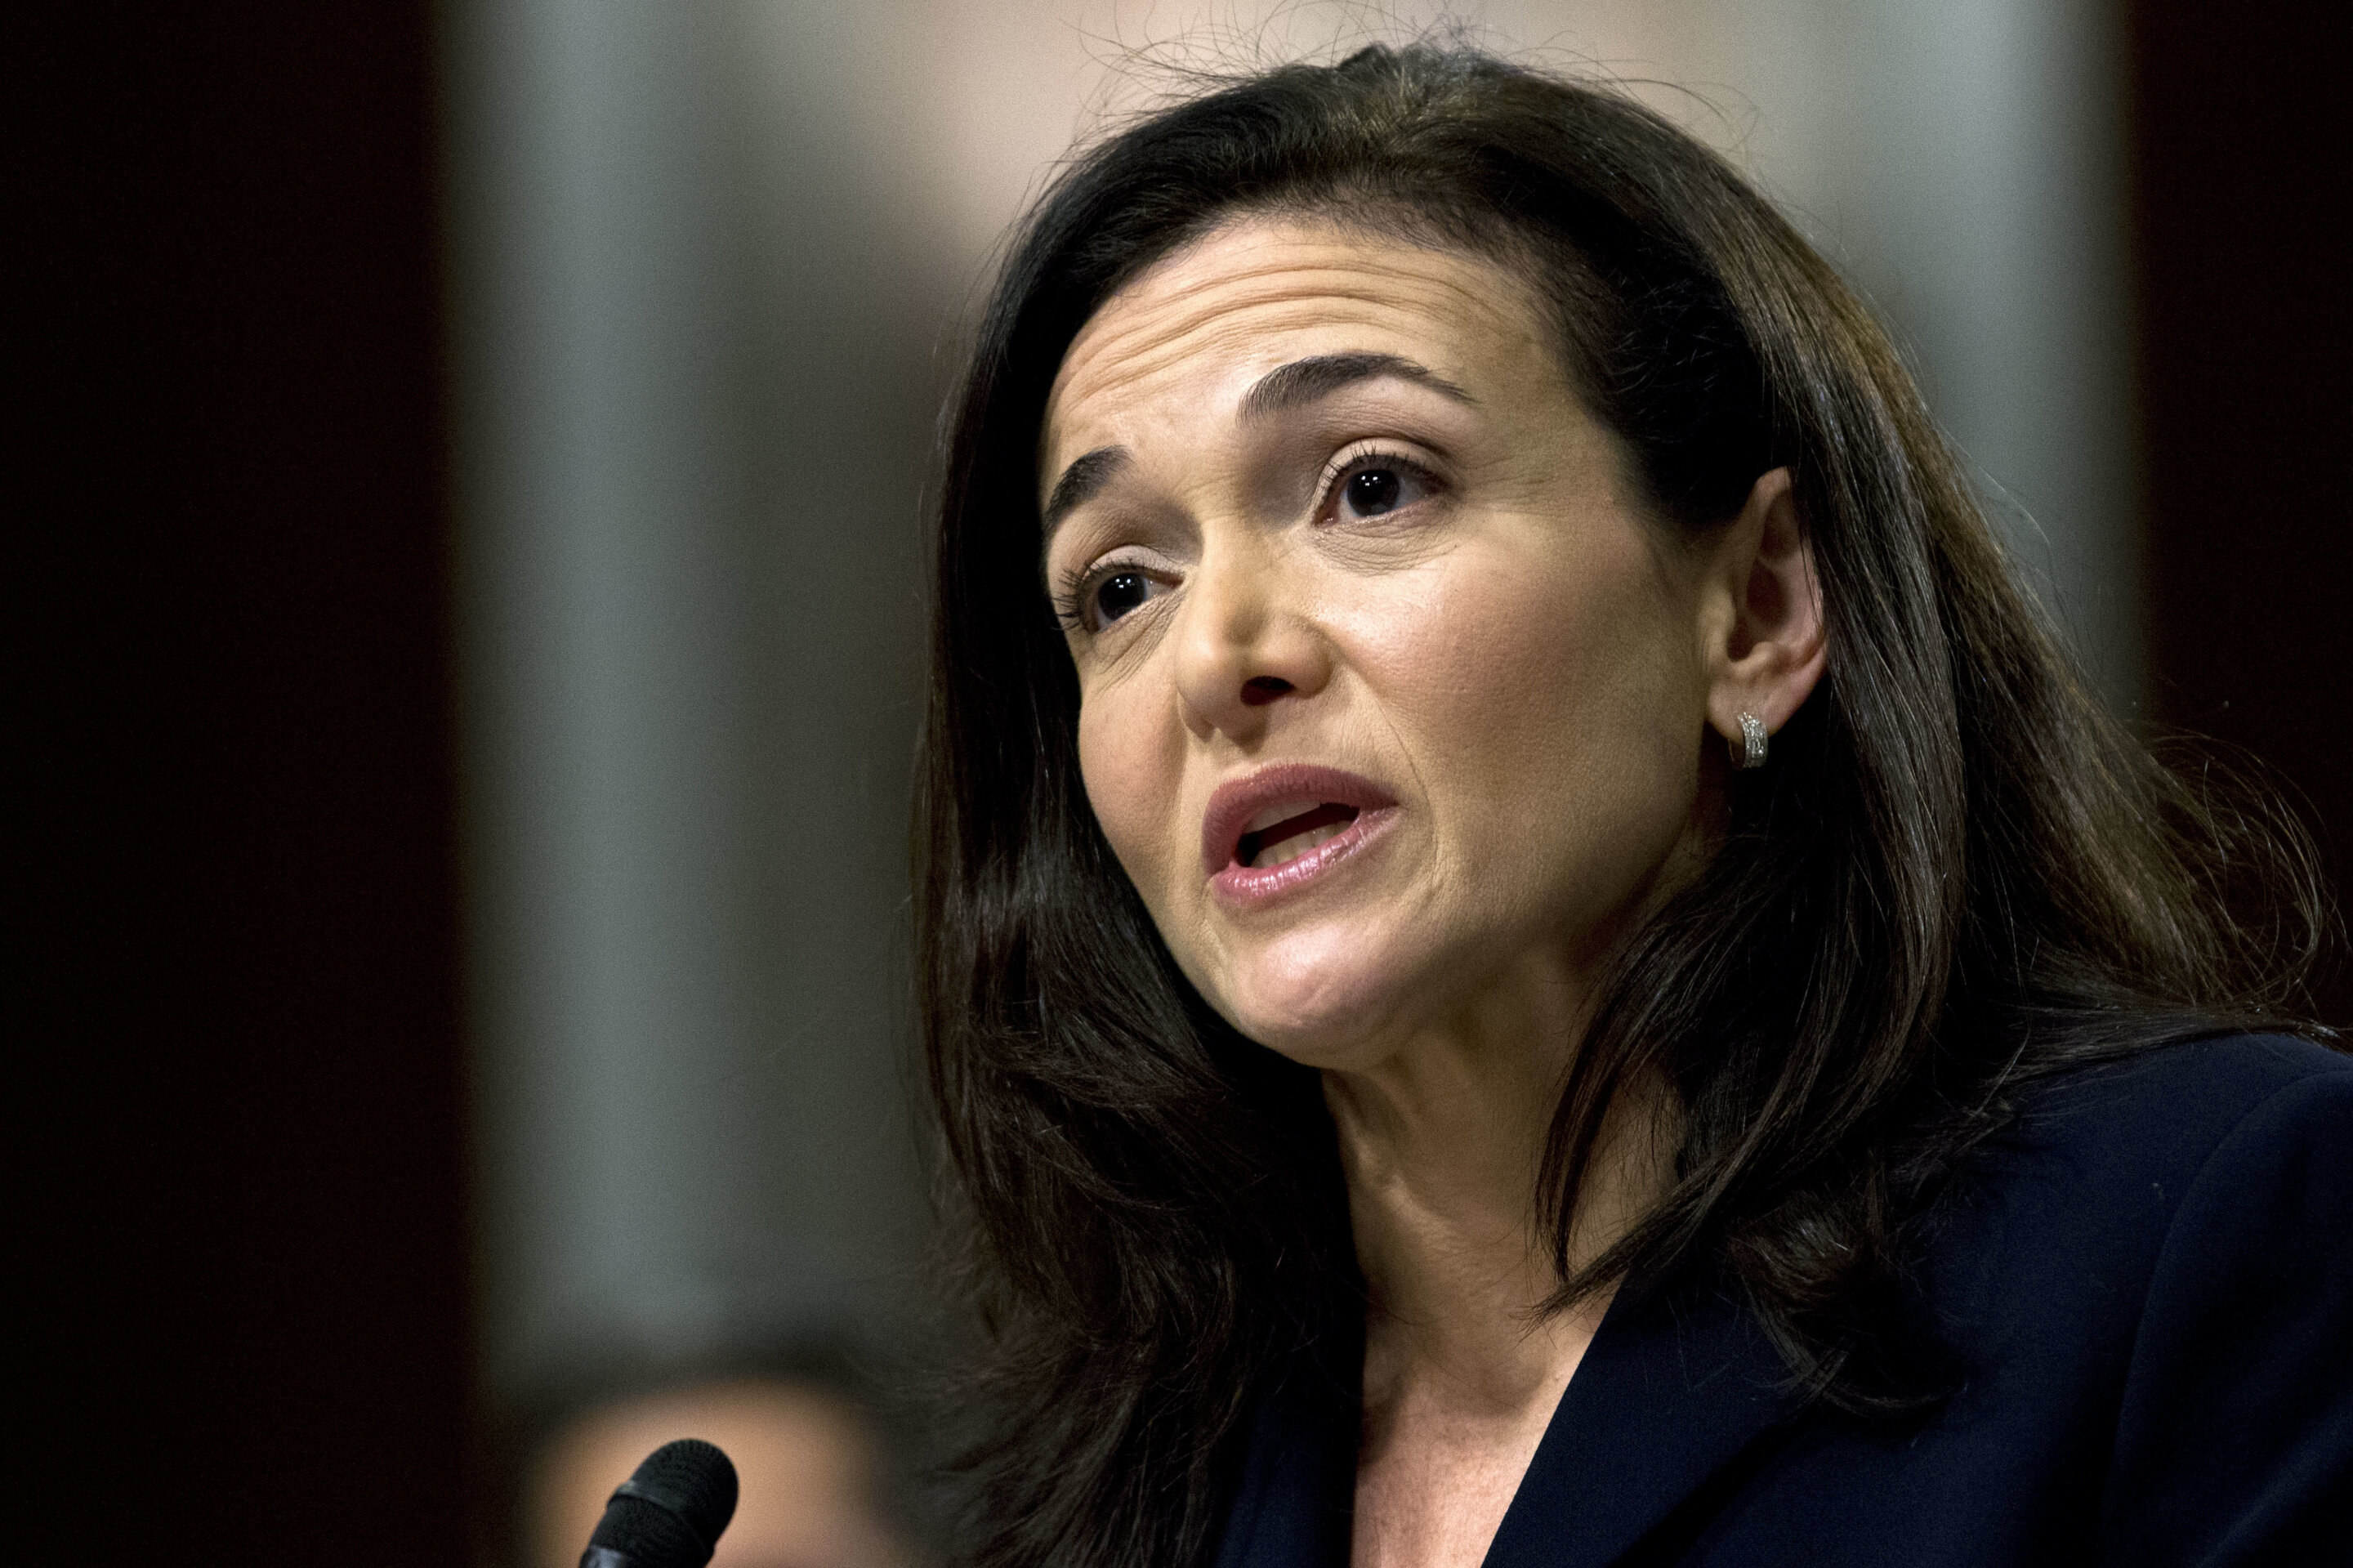 #Sheryl Sandberg, longtime No. 2 exec at Facebook, steps down